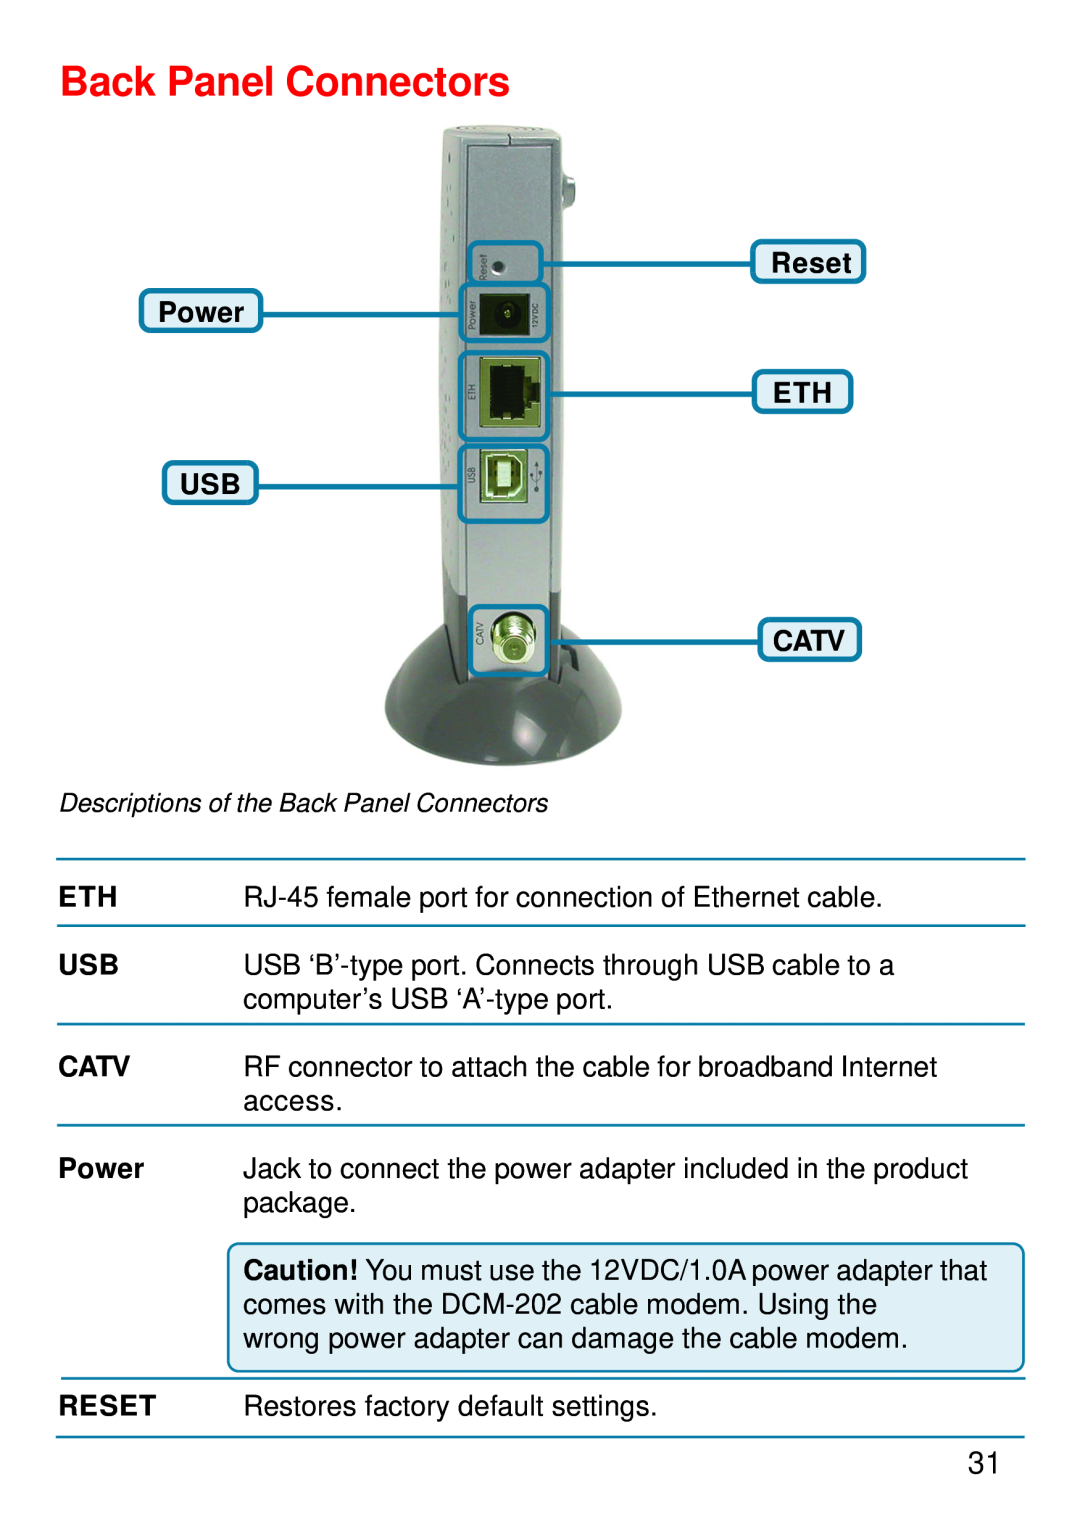 D-Link DCM-202 manual Back Panel Connectors, Reset Power ETH USB CATV, Catv 